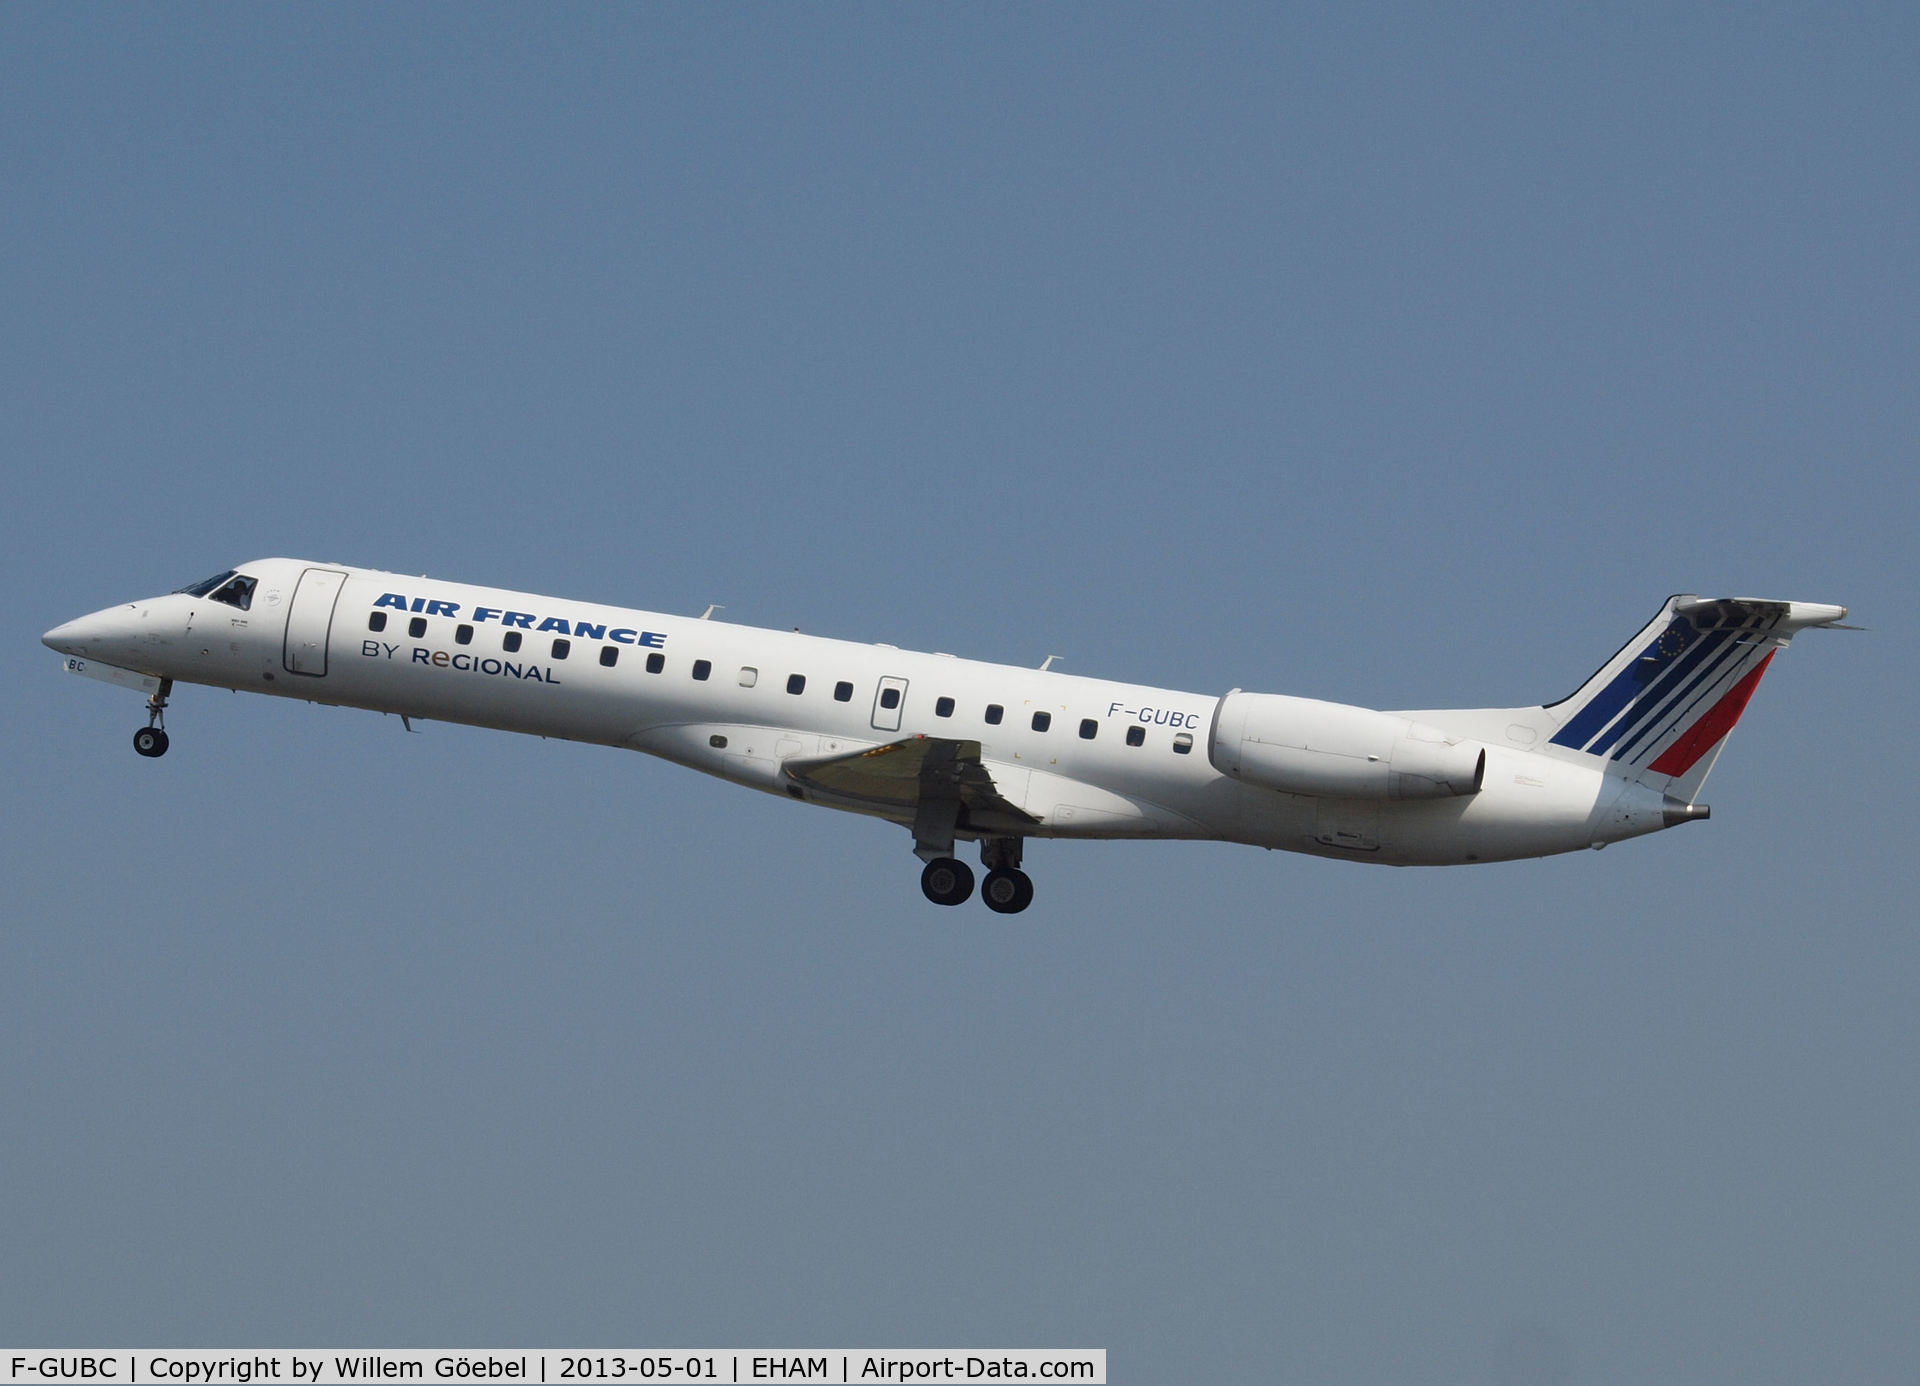 F-GUBC, 2002 Embraer ERJ-145LR (EMB-145LR) C/N 145556, Take off from runway 36L of Schiphol Airport